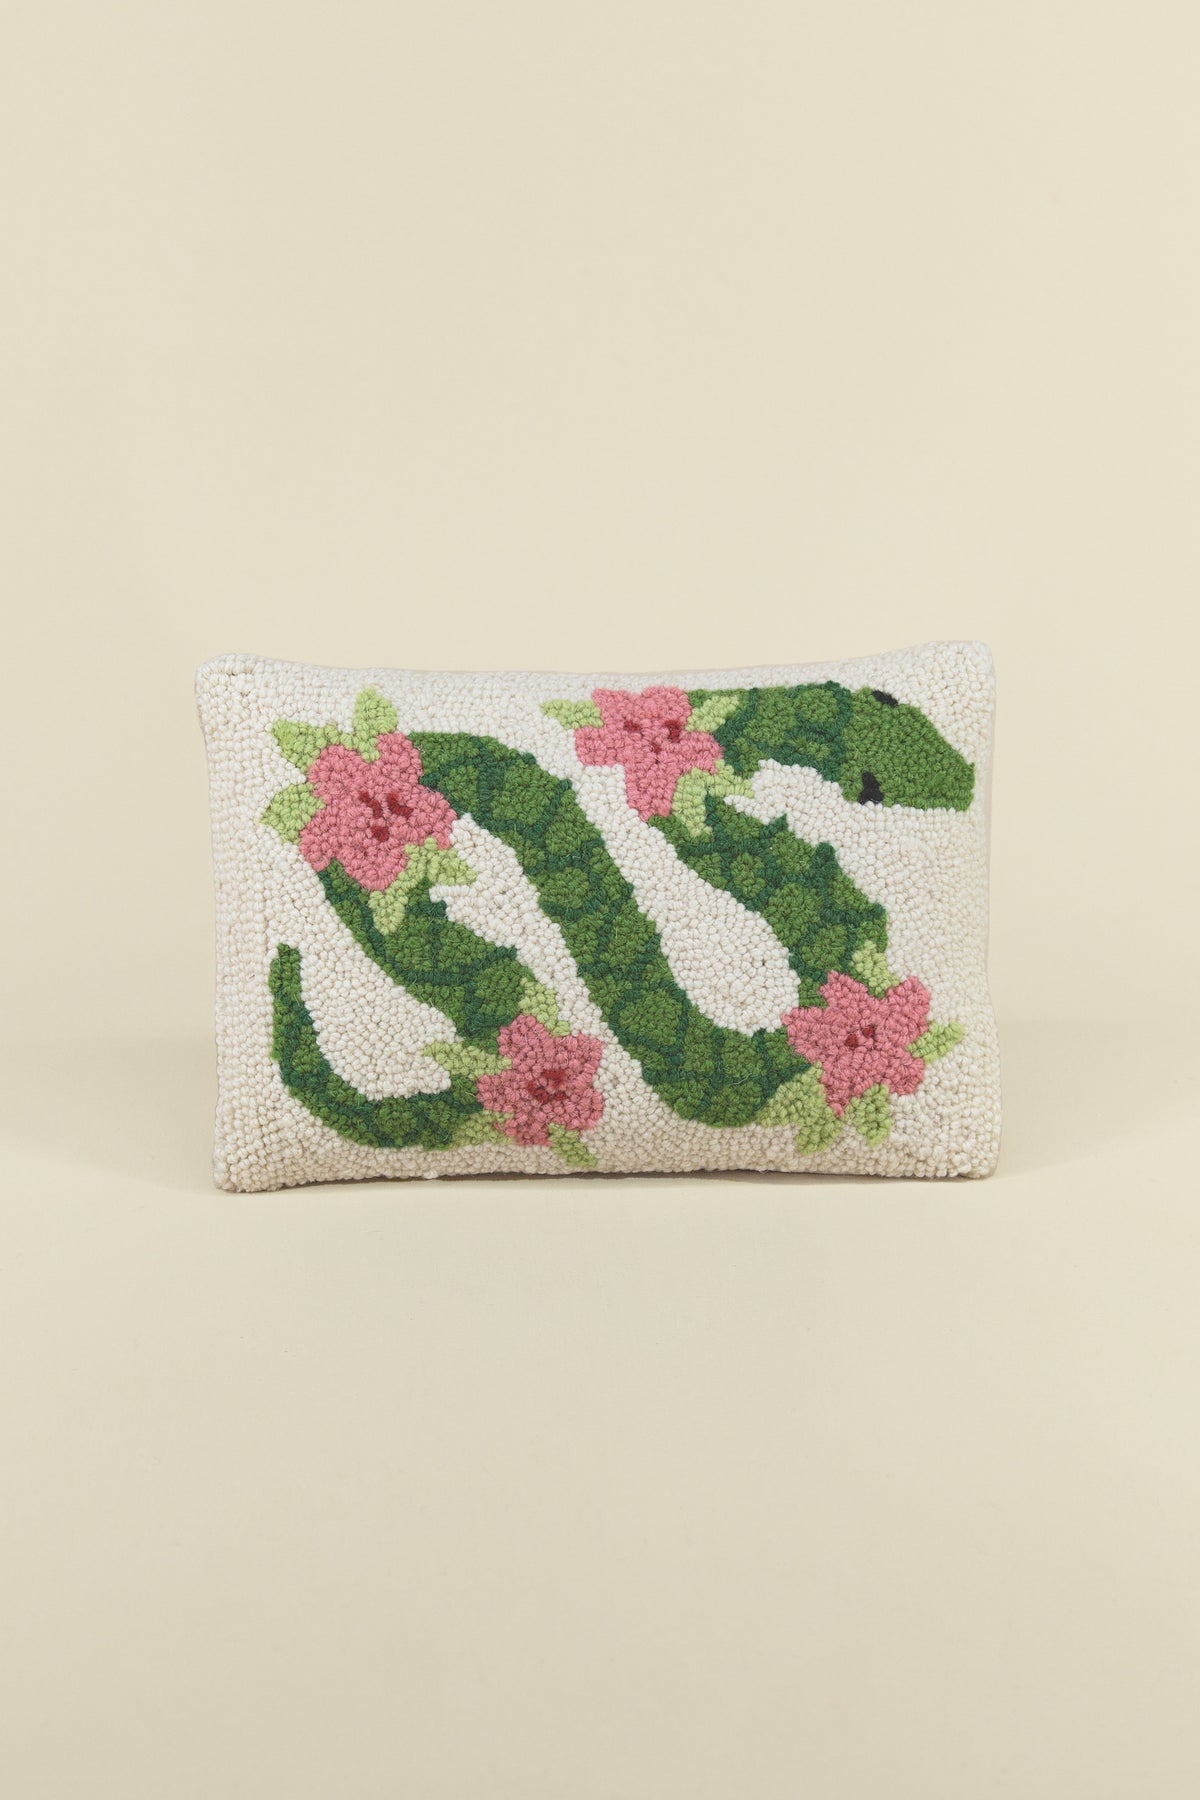 floral snake hook pillow